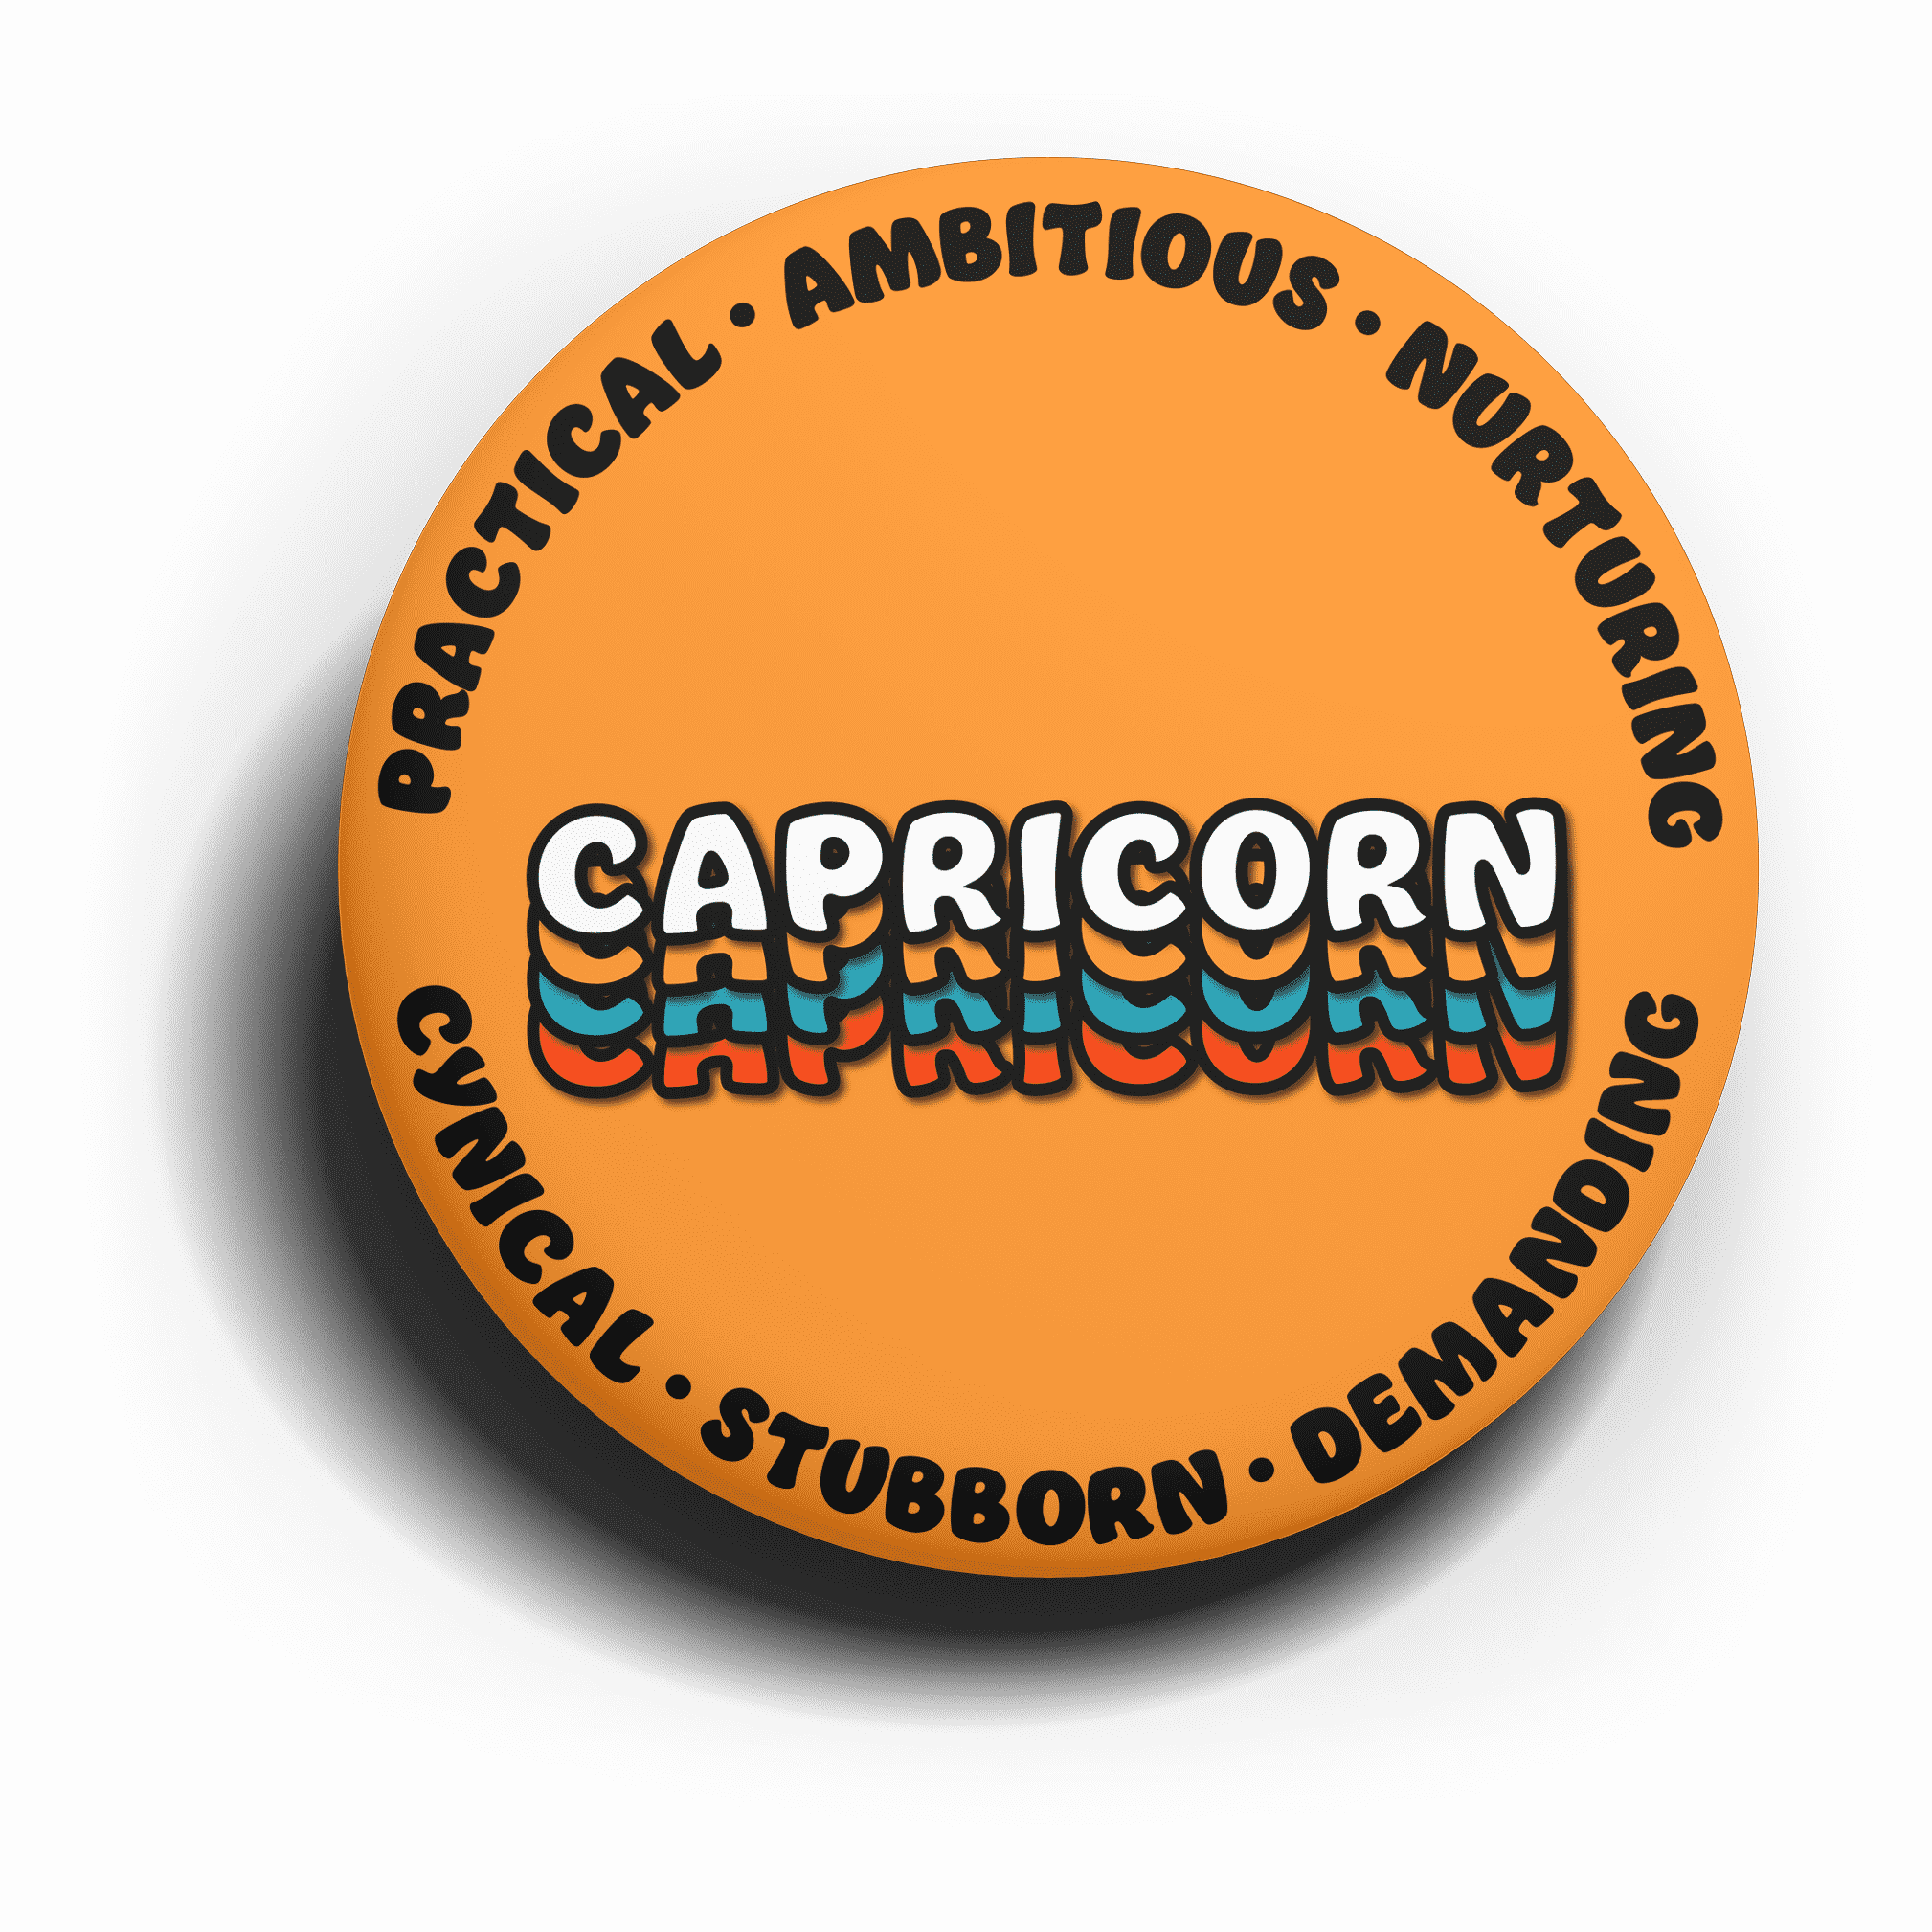 (Zodiac) Capricorn Characteristics